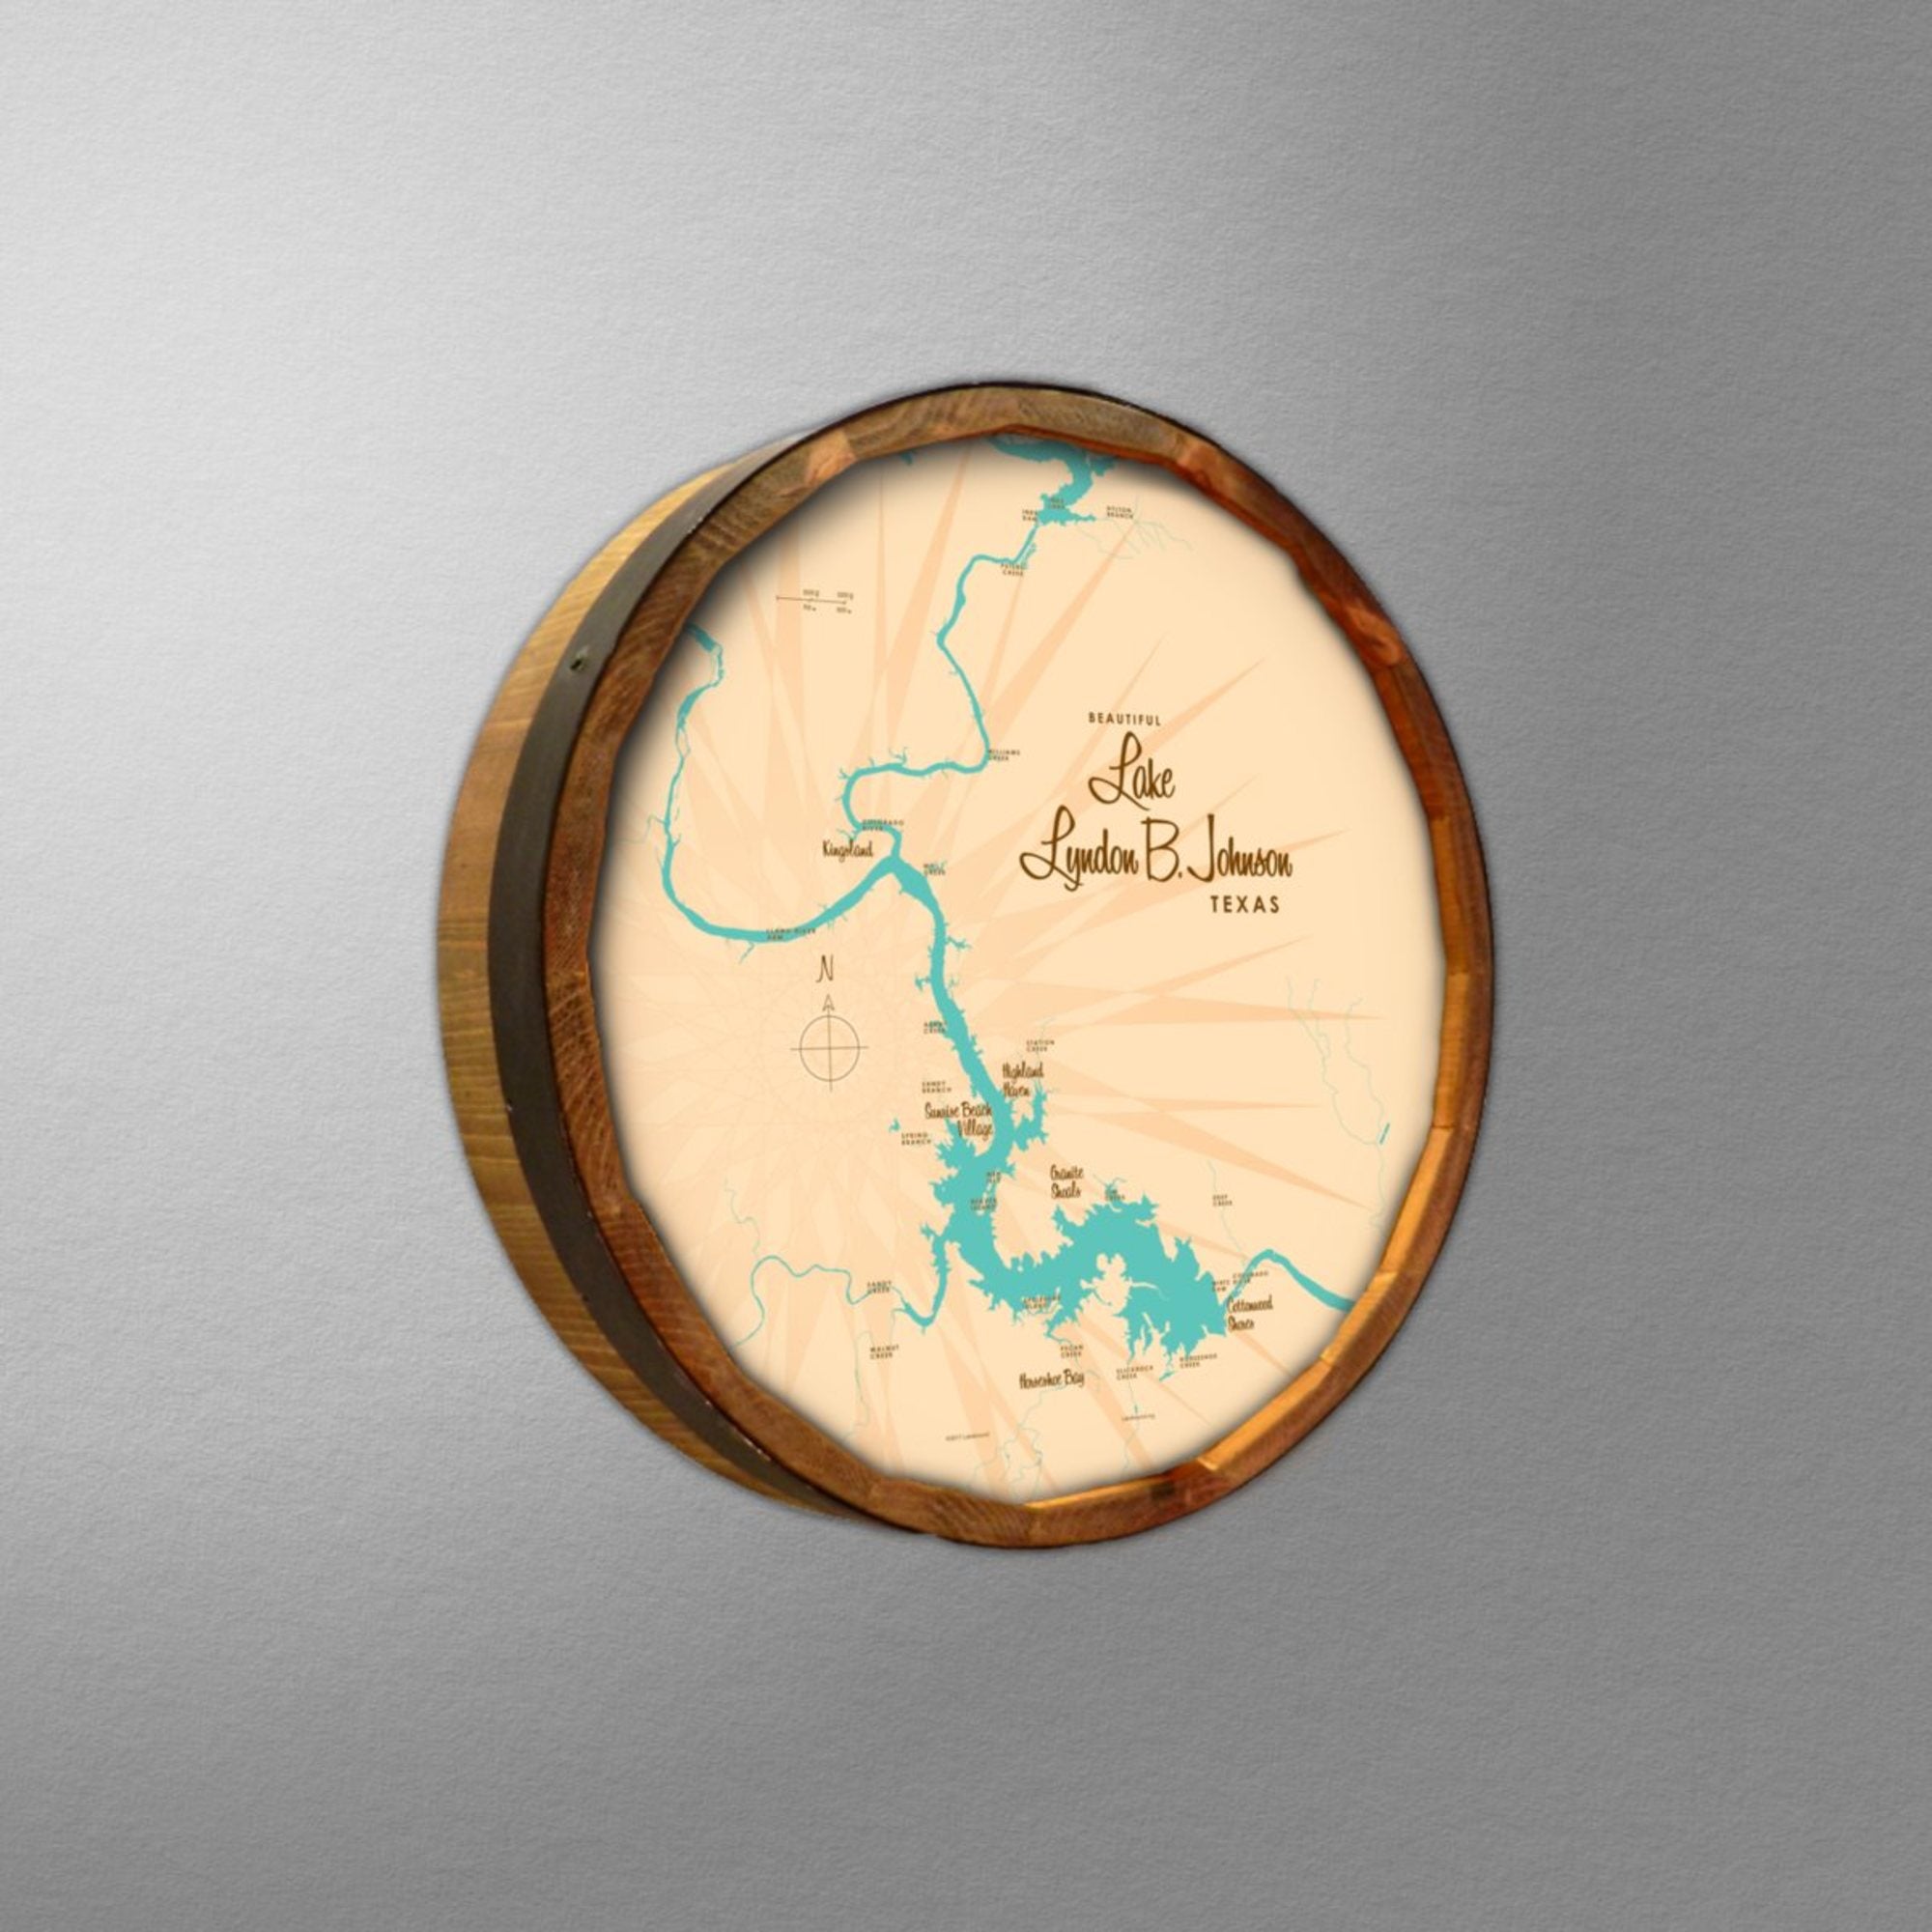 Lake LBJ Texas, Barrel End Map Art